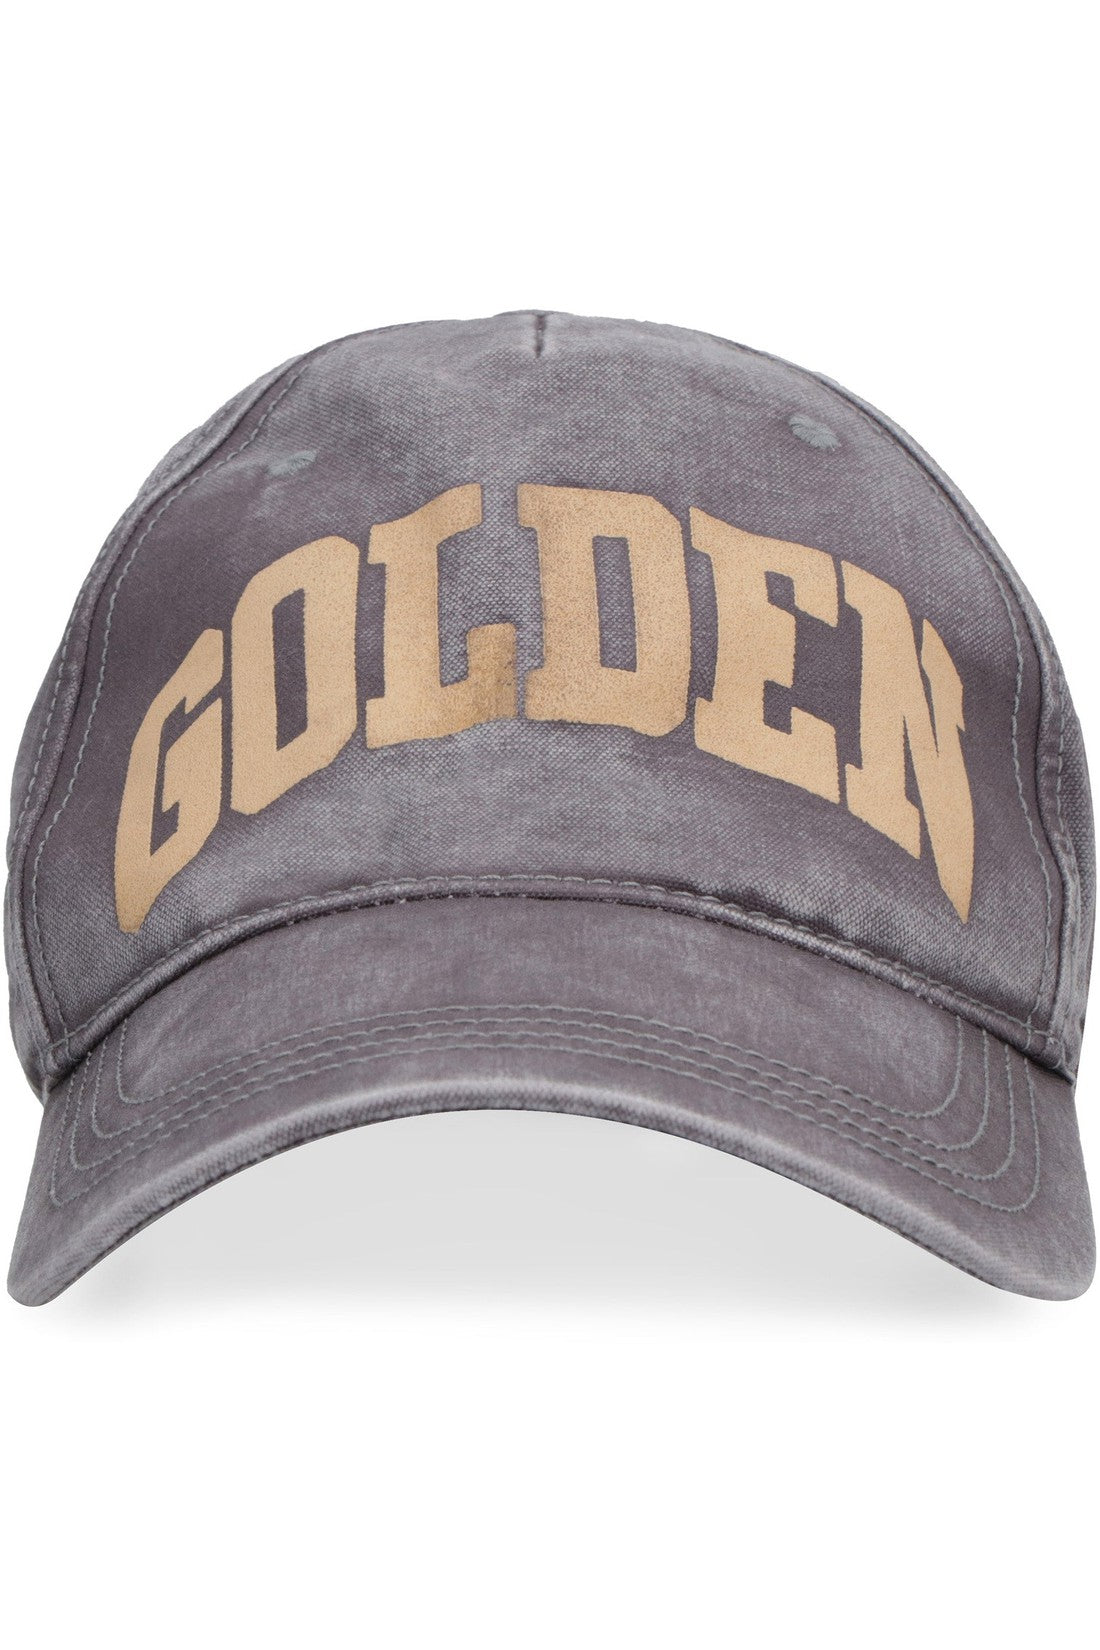 Golden Goose-OUTLET-SALE-Logo baseball cap-ARCHIVIST